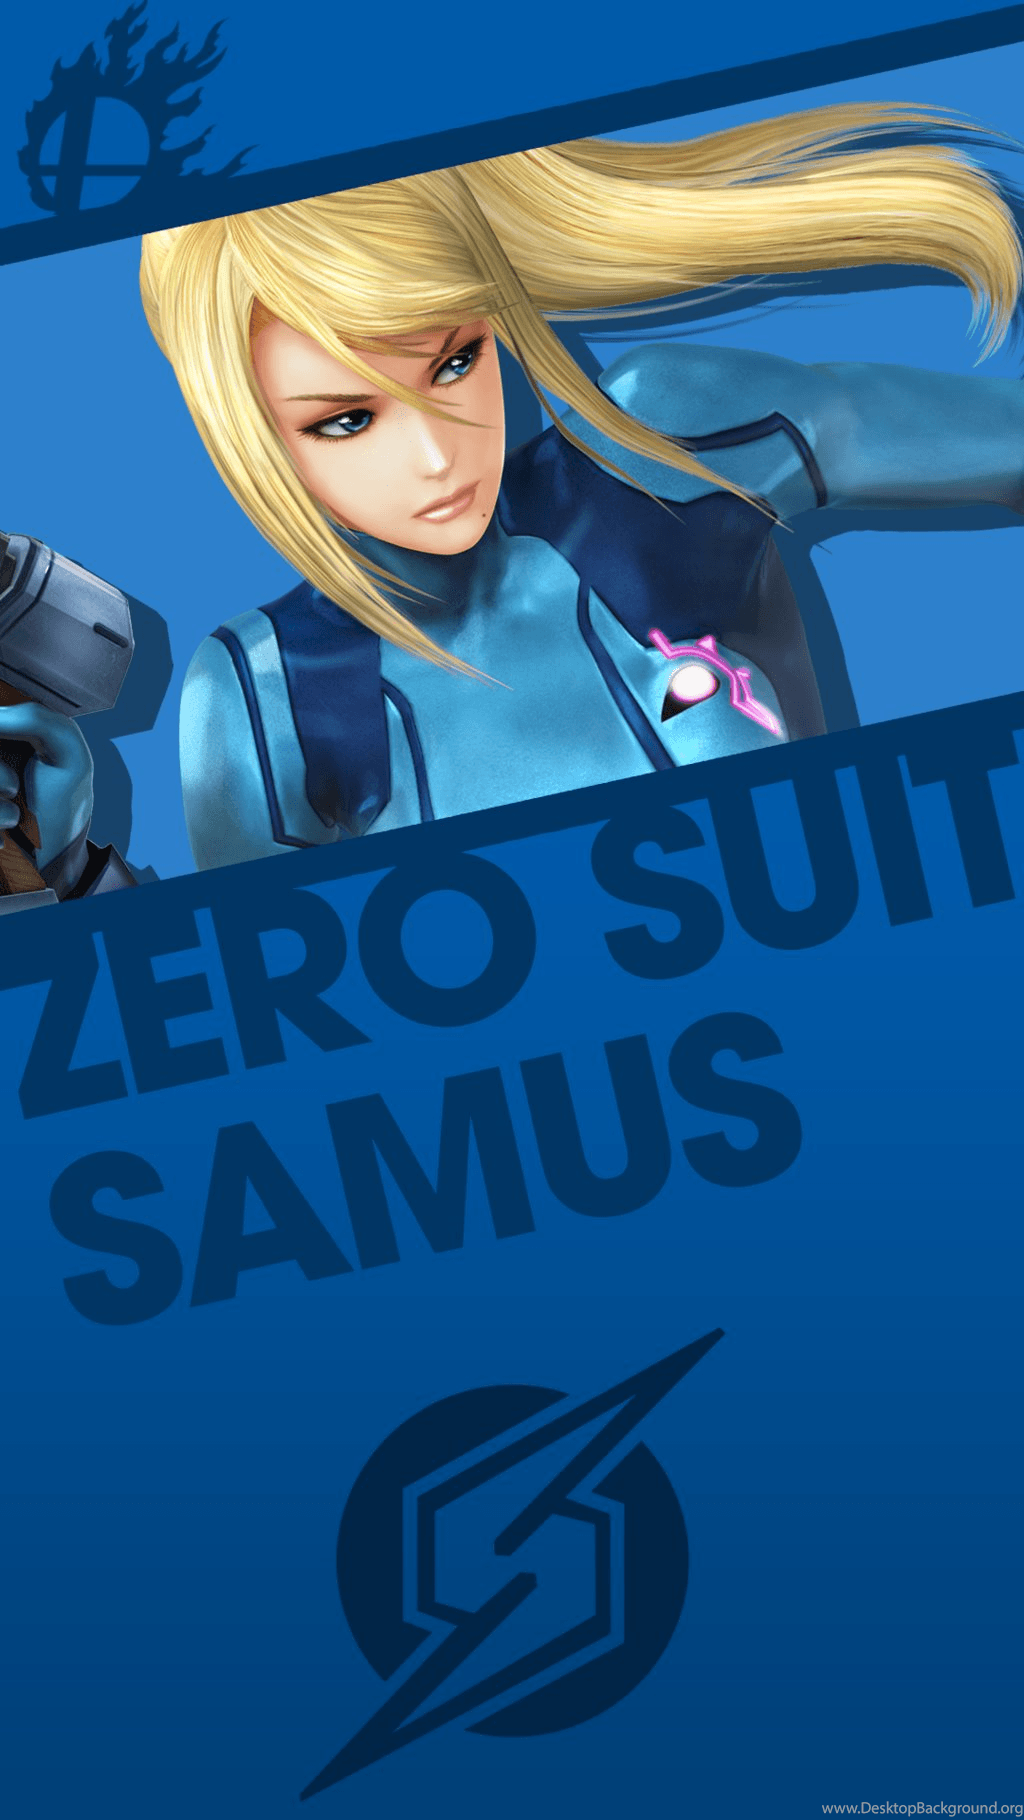 Zero Suit Samus Smash Bros. Phone Wallpaper By MrThatKidAlex24 On